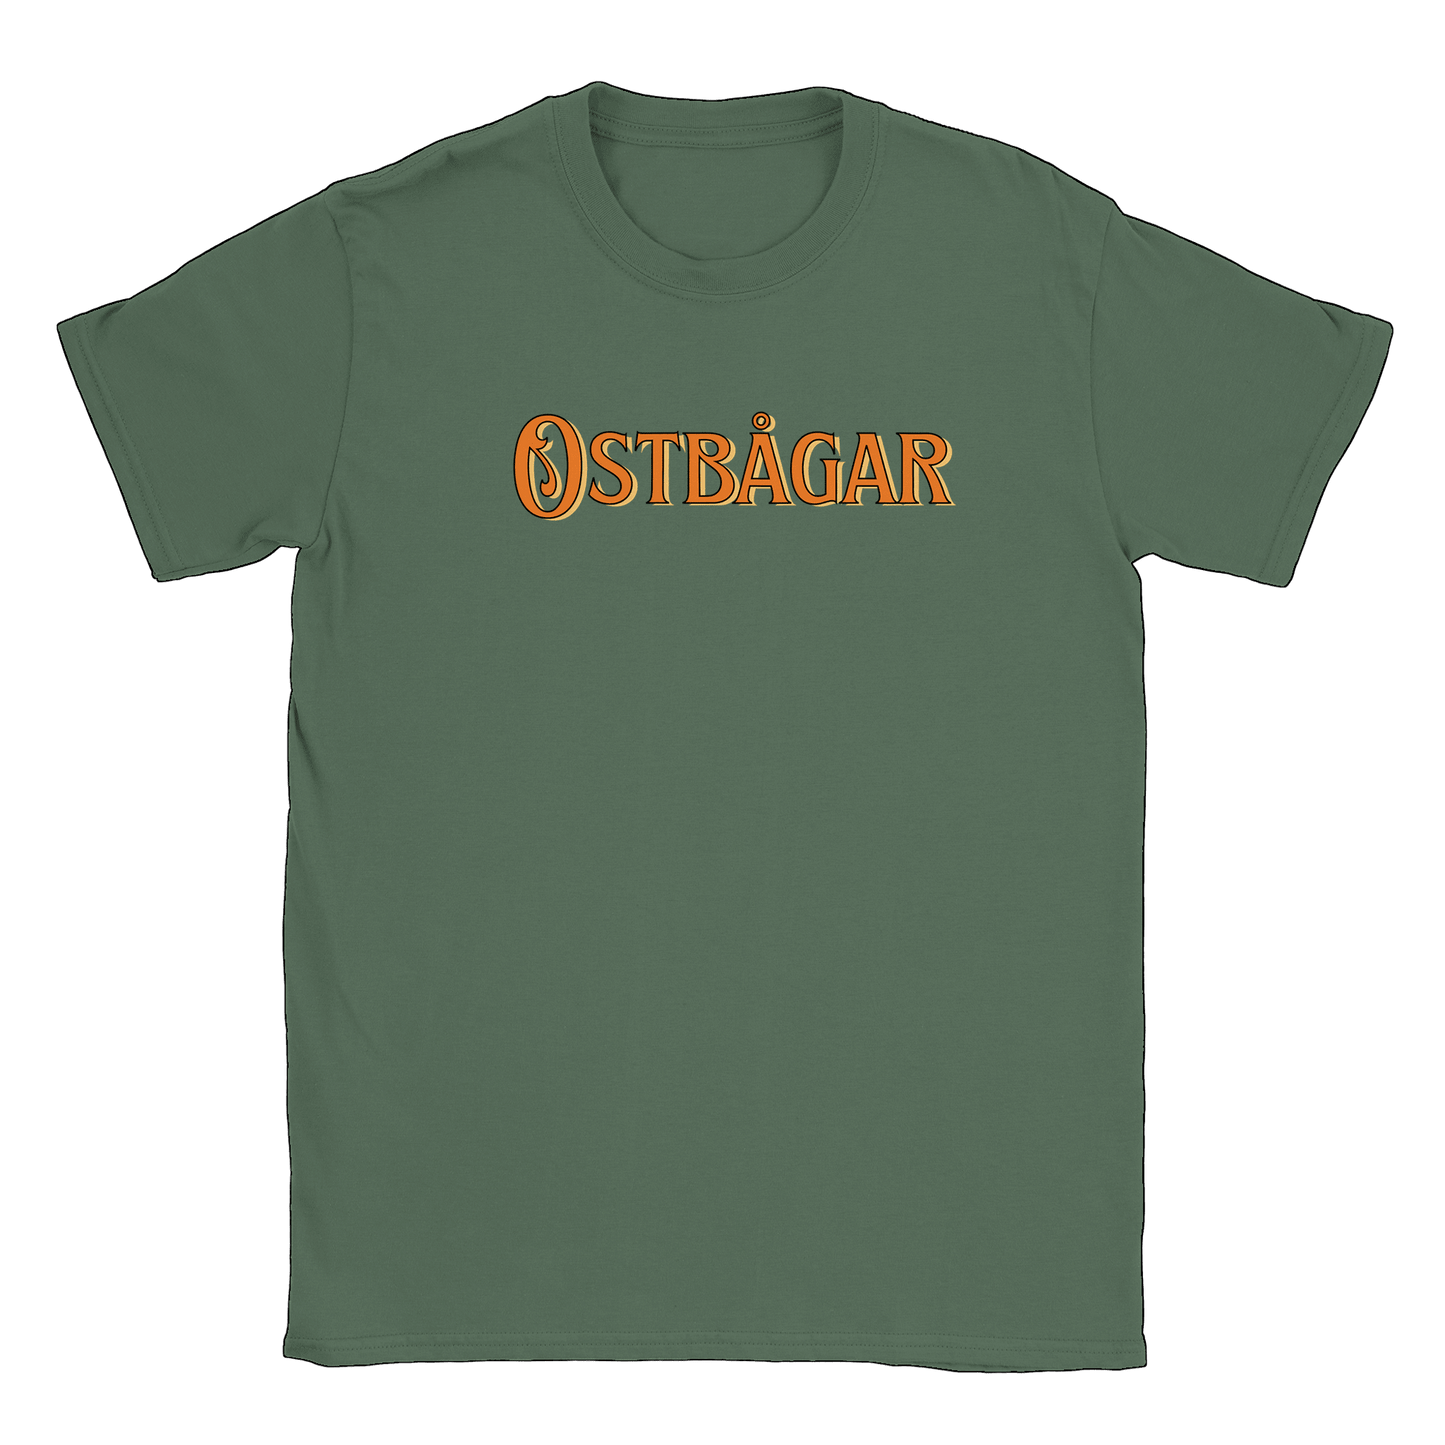 Ostbågar - T-shirt Military Green